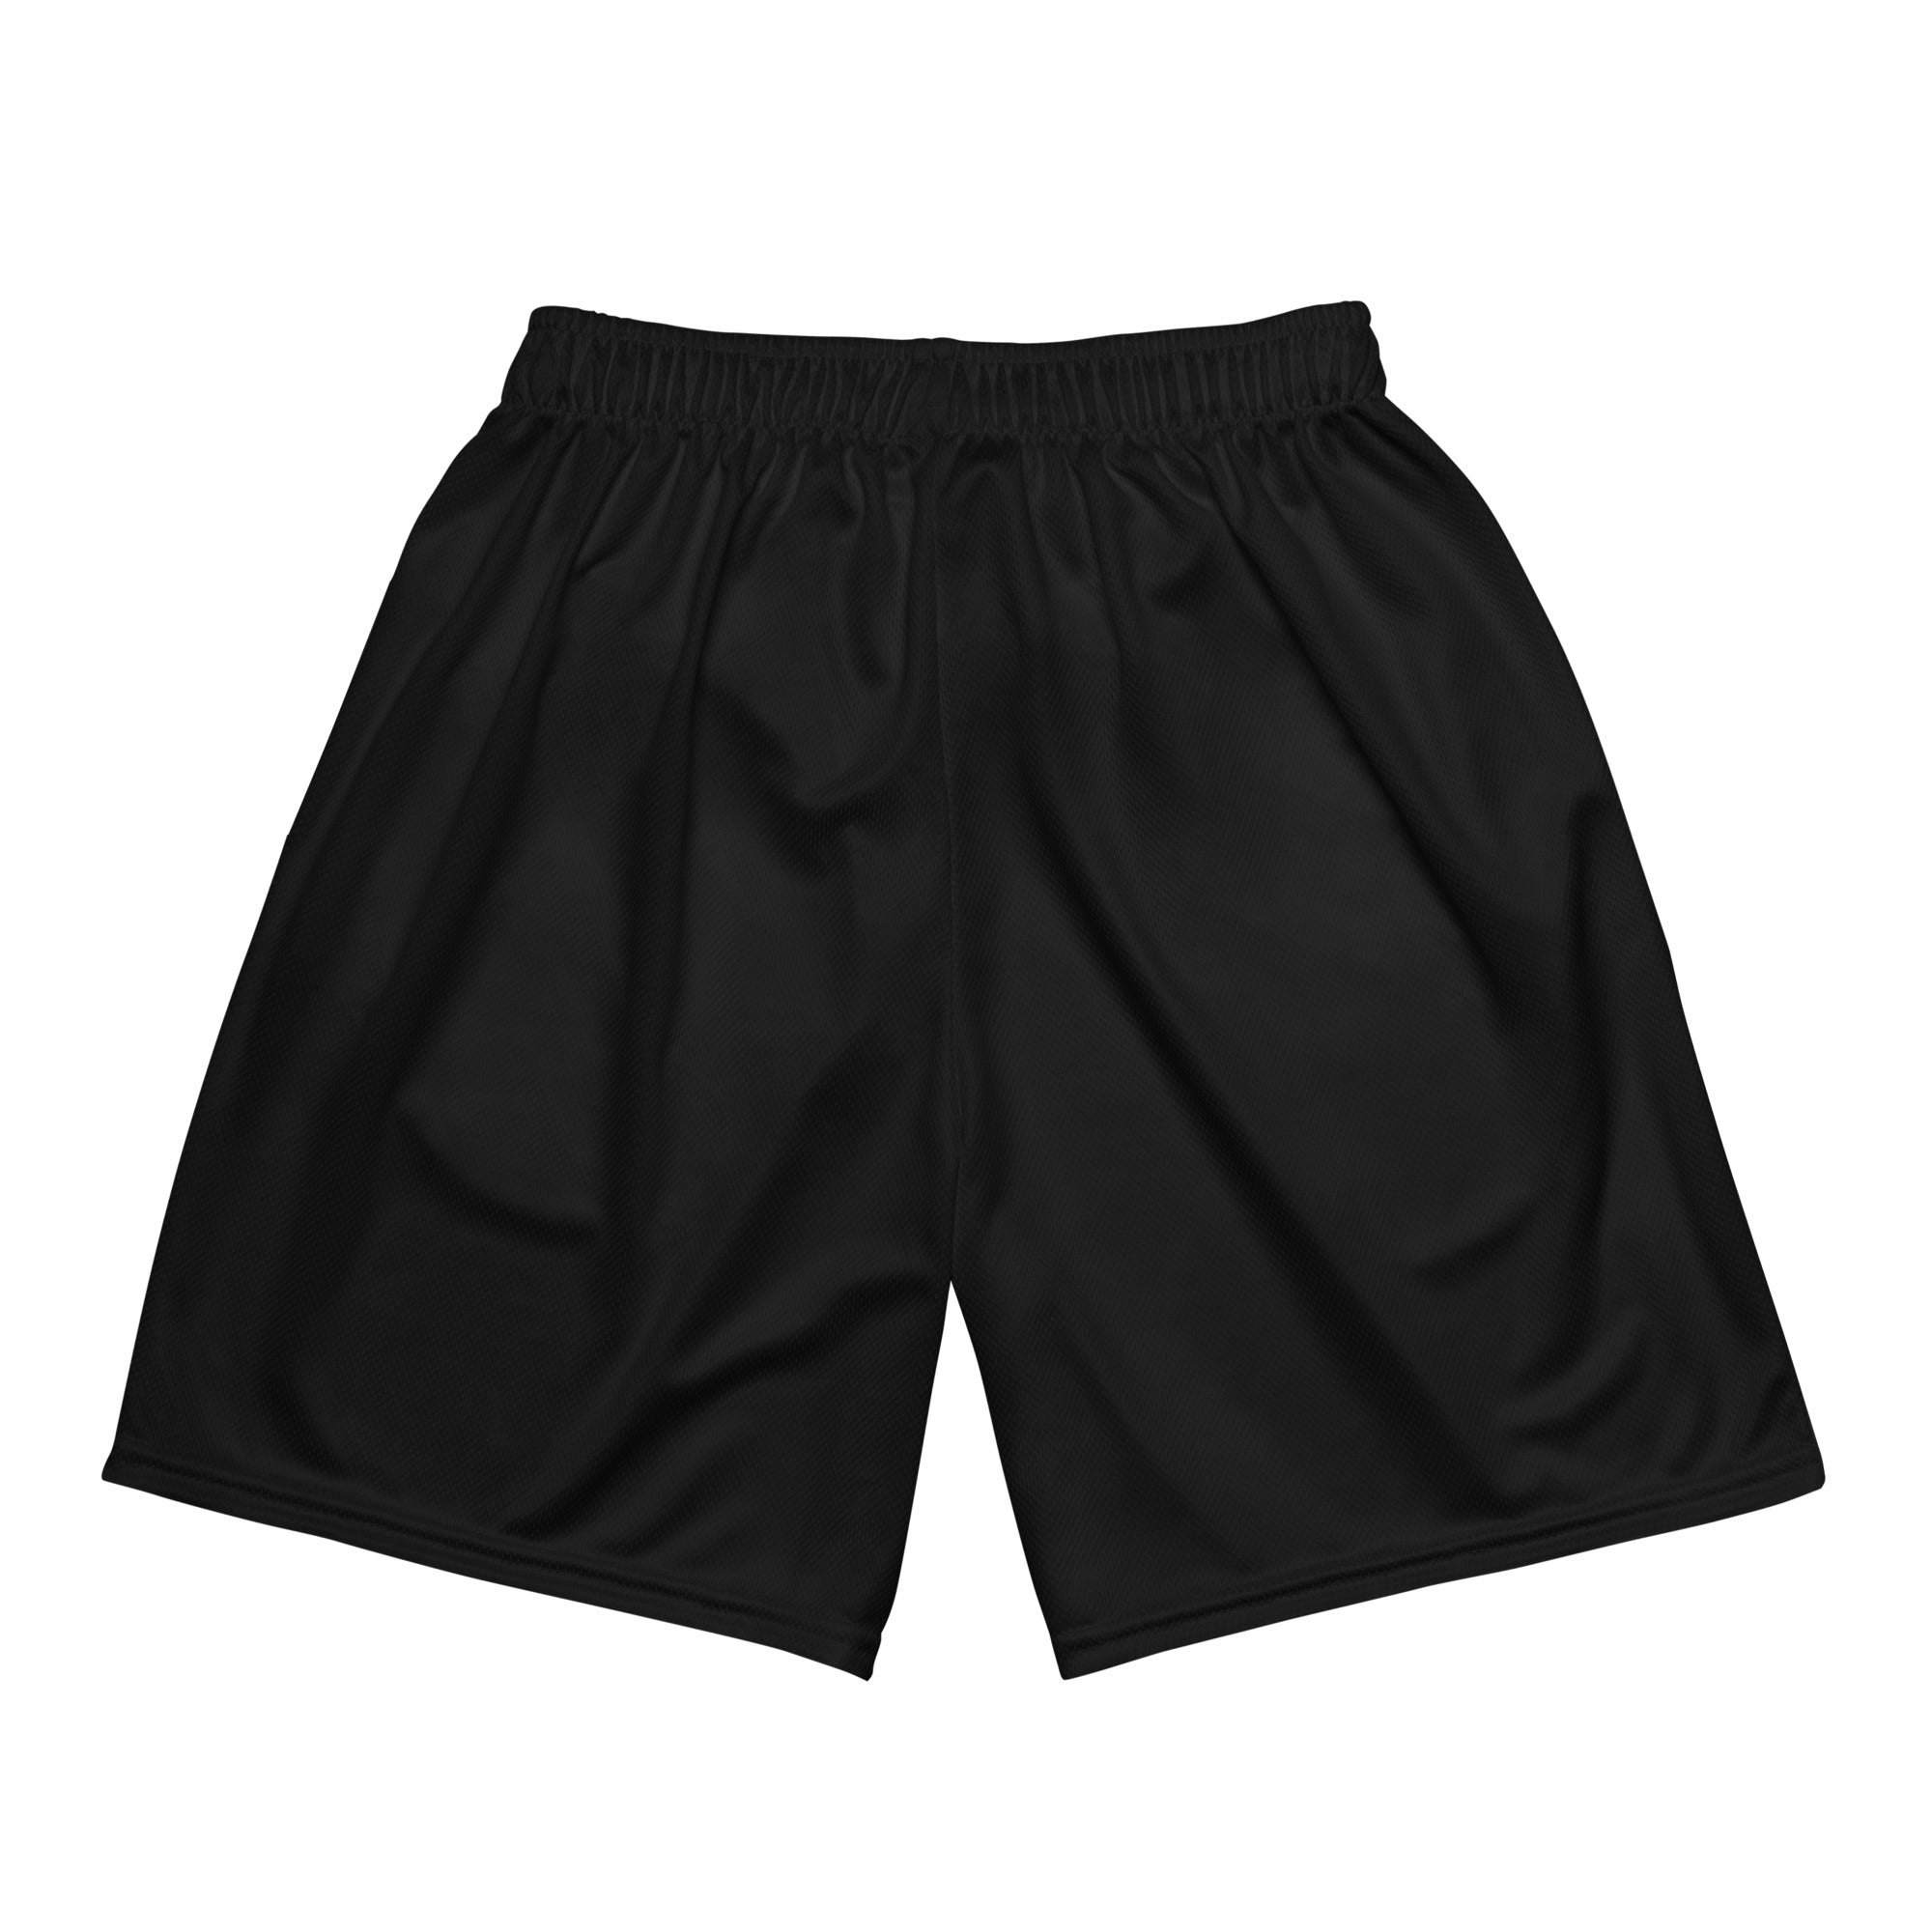 Chelmsford Unisex mesh shorts